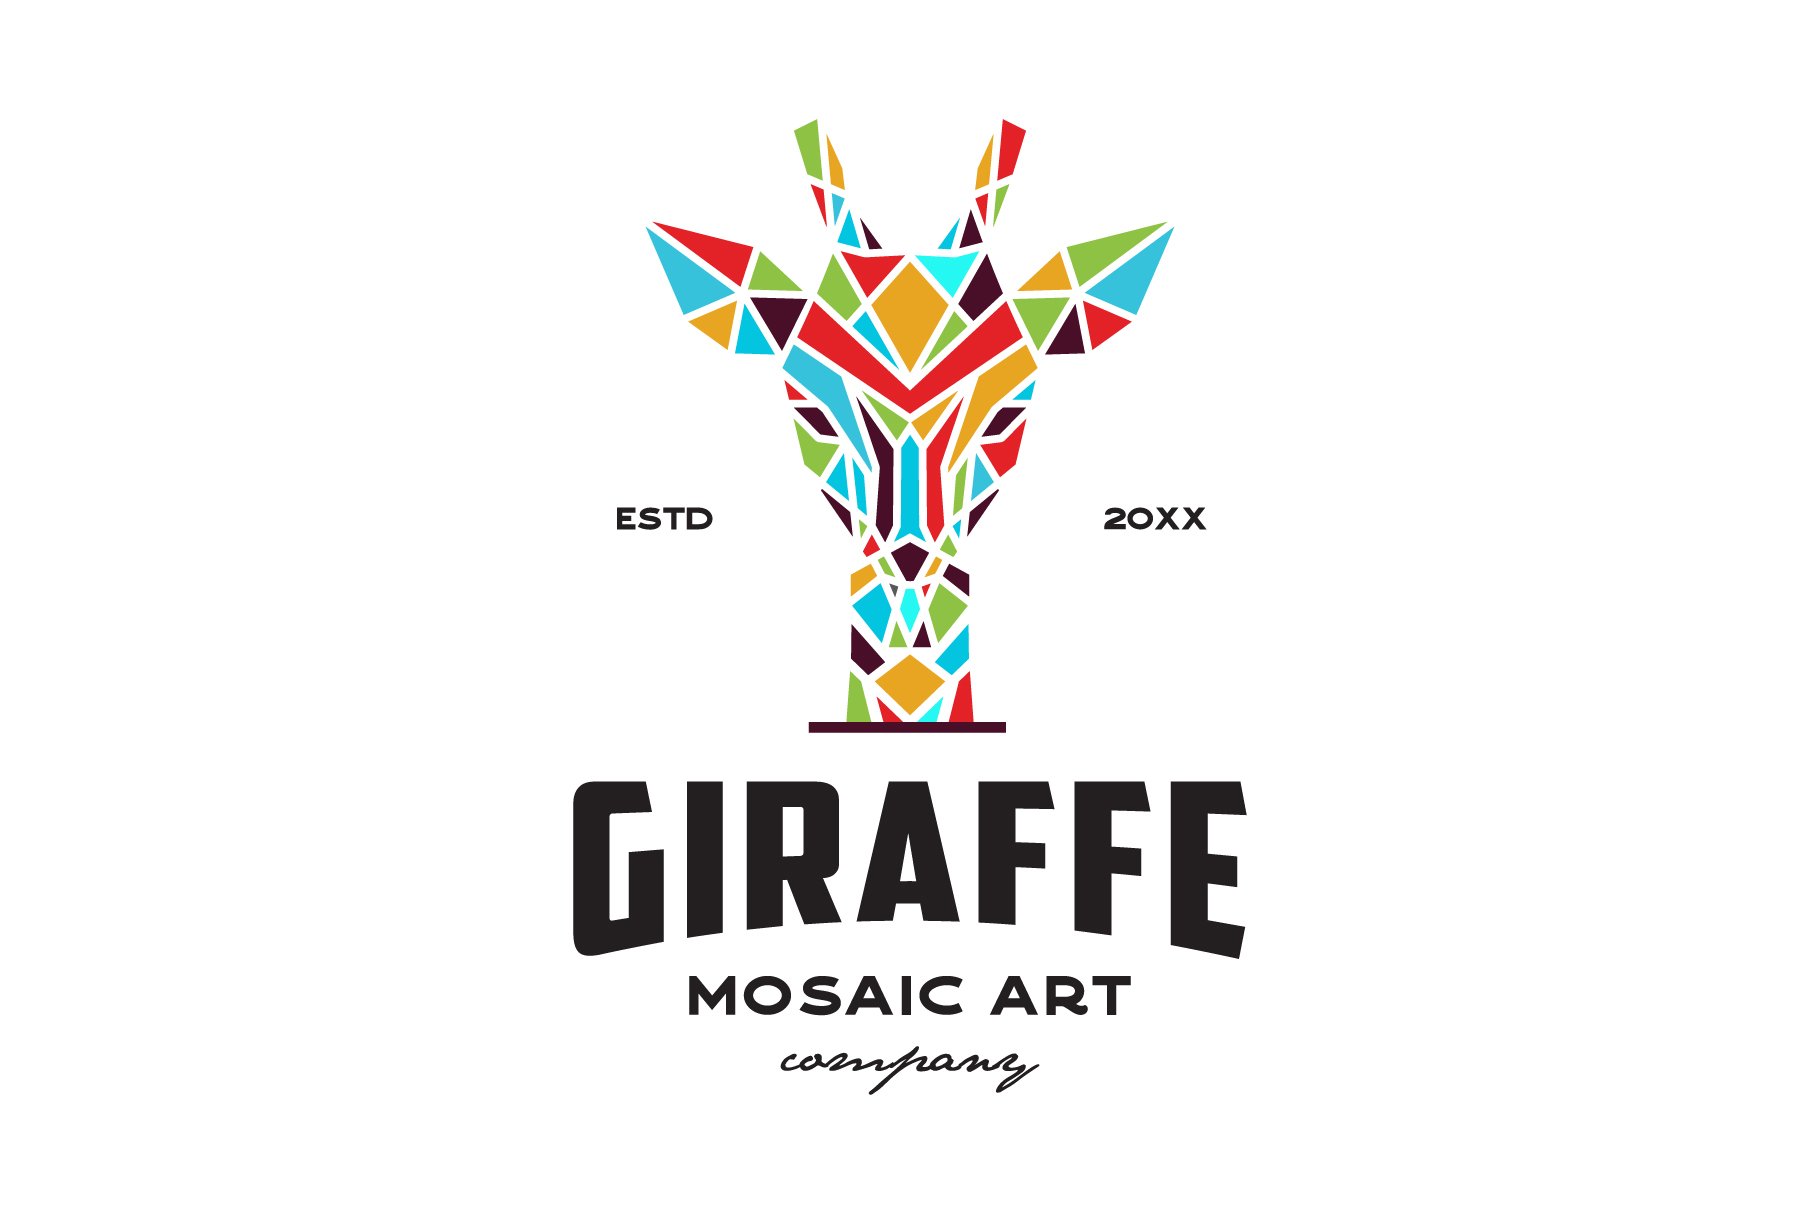 Mosaic Giraffe Logo cover image.